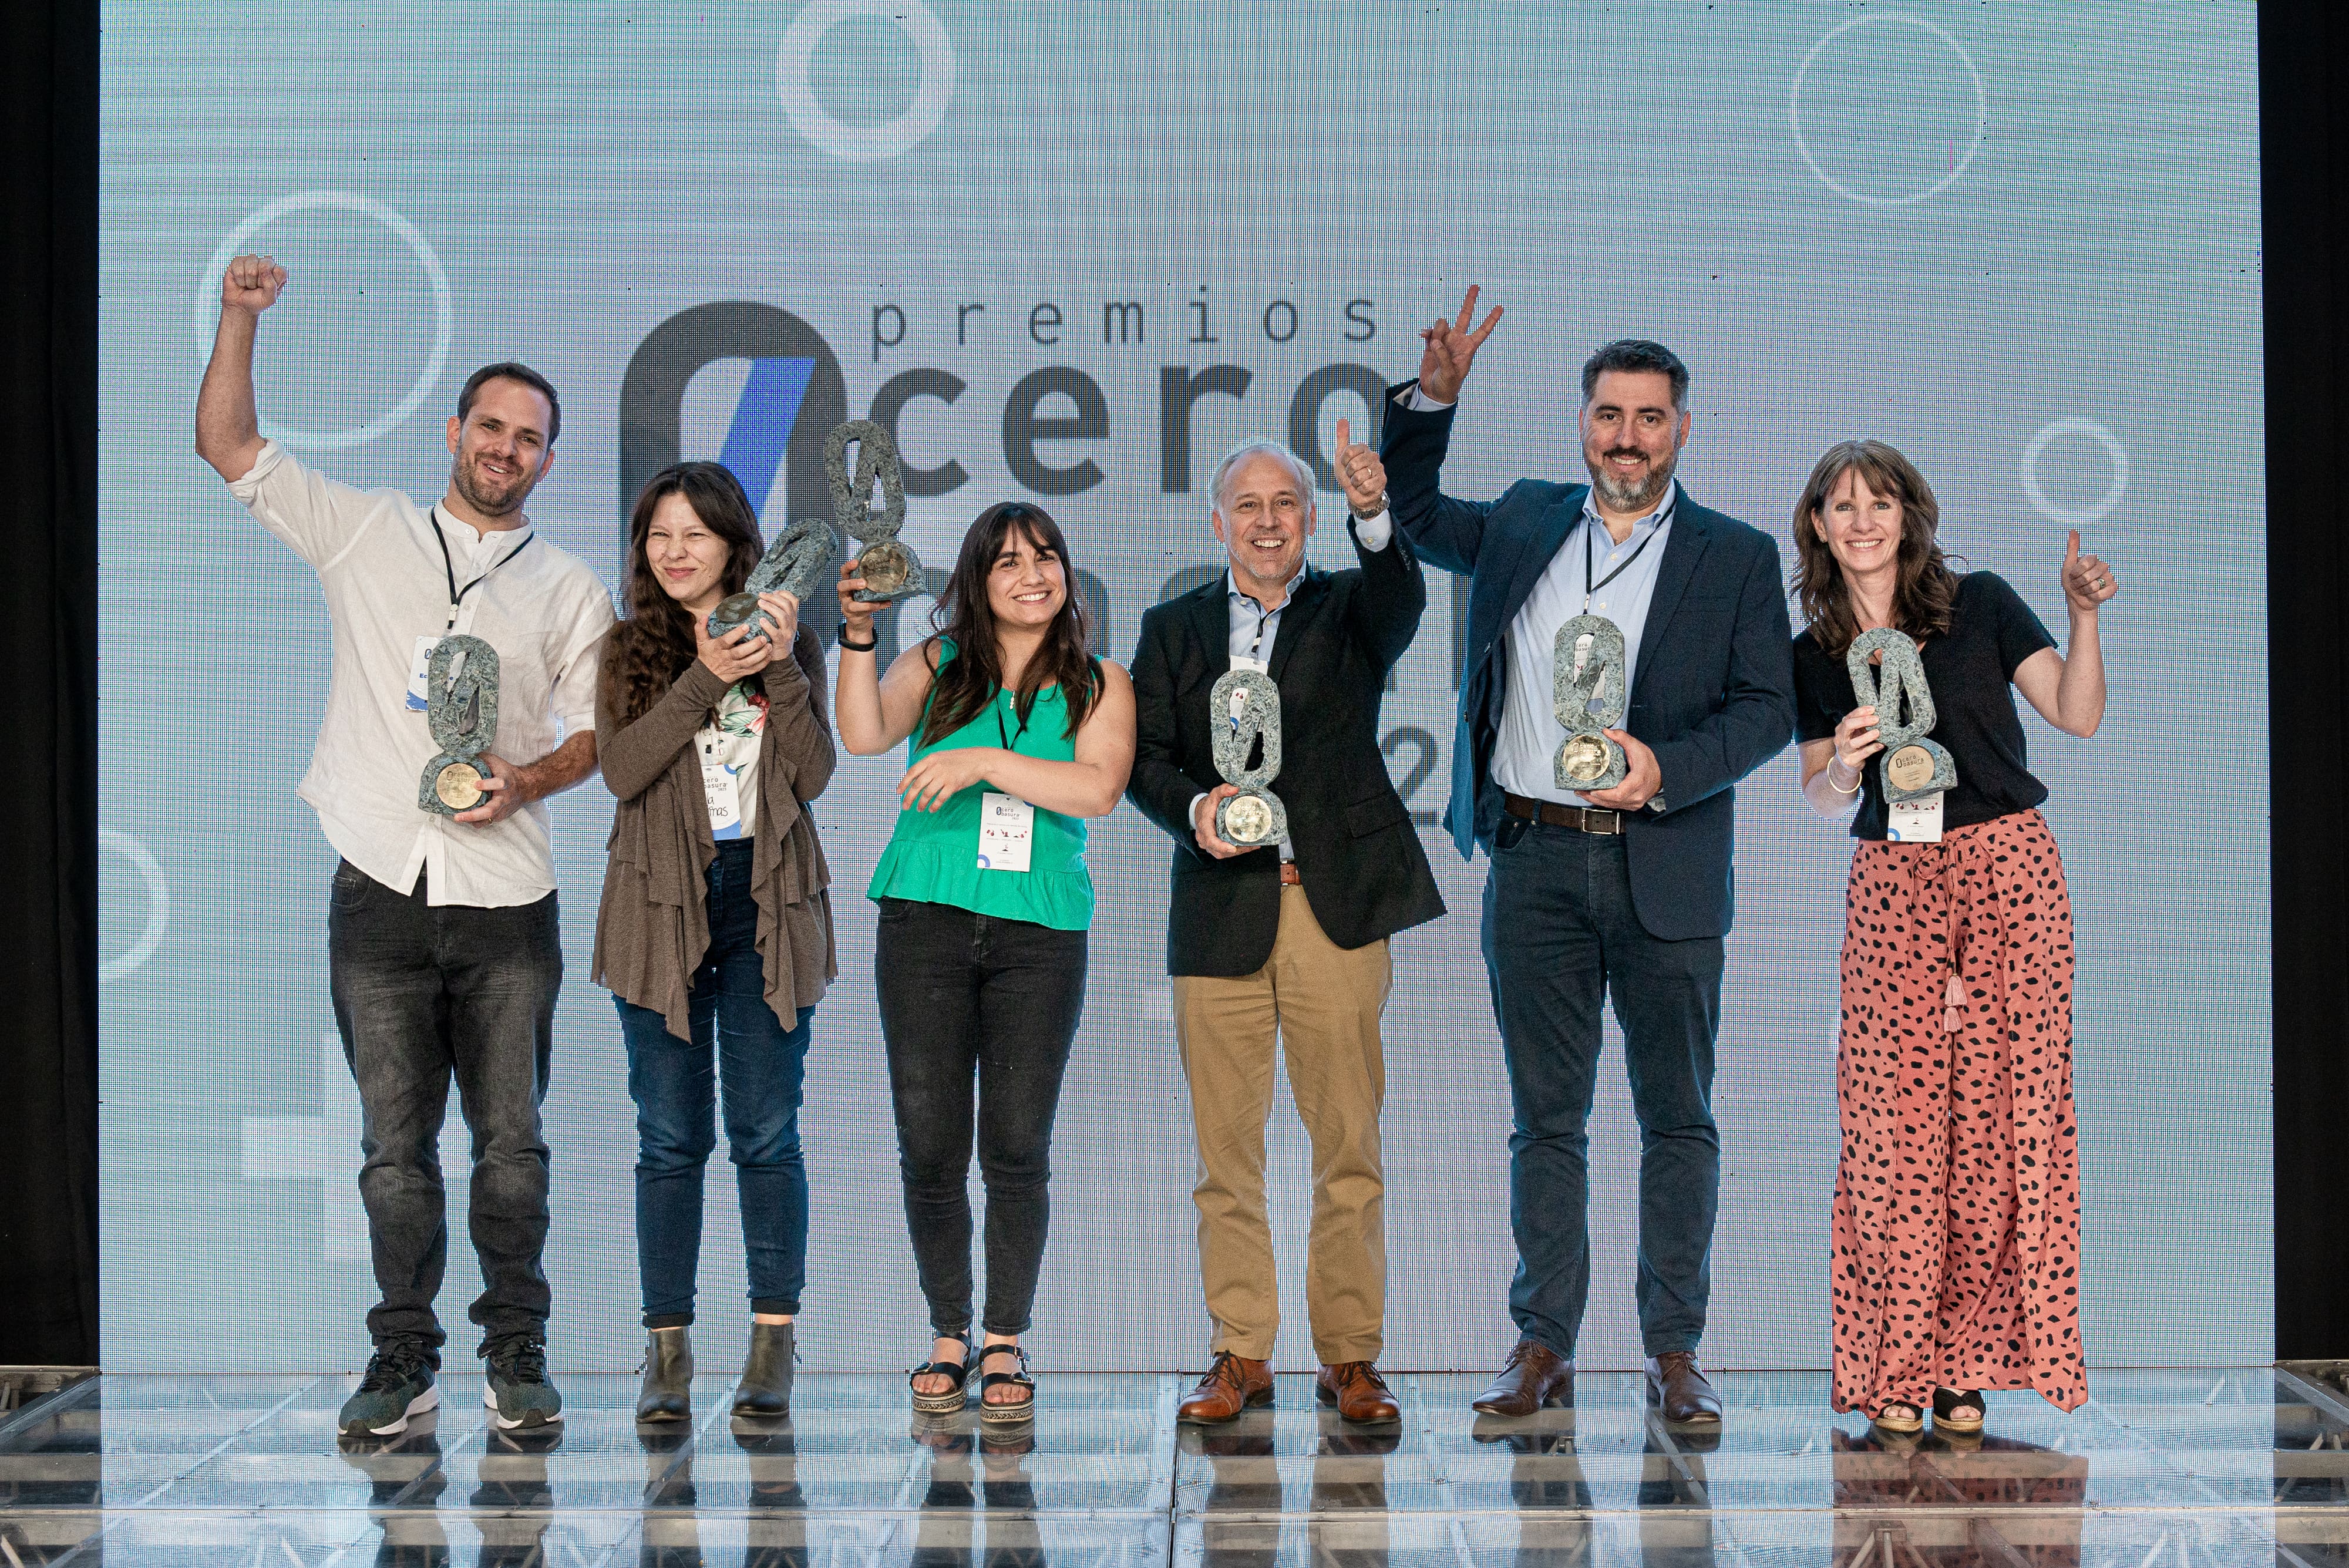 Premios Cero Basura destacan innovadores proyectos de economía circular